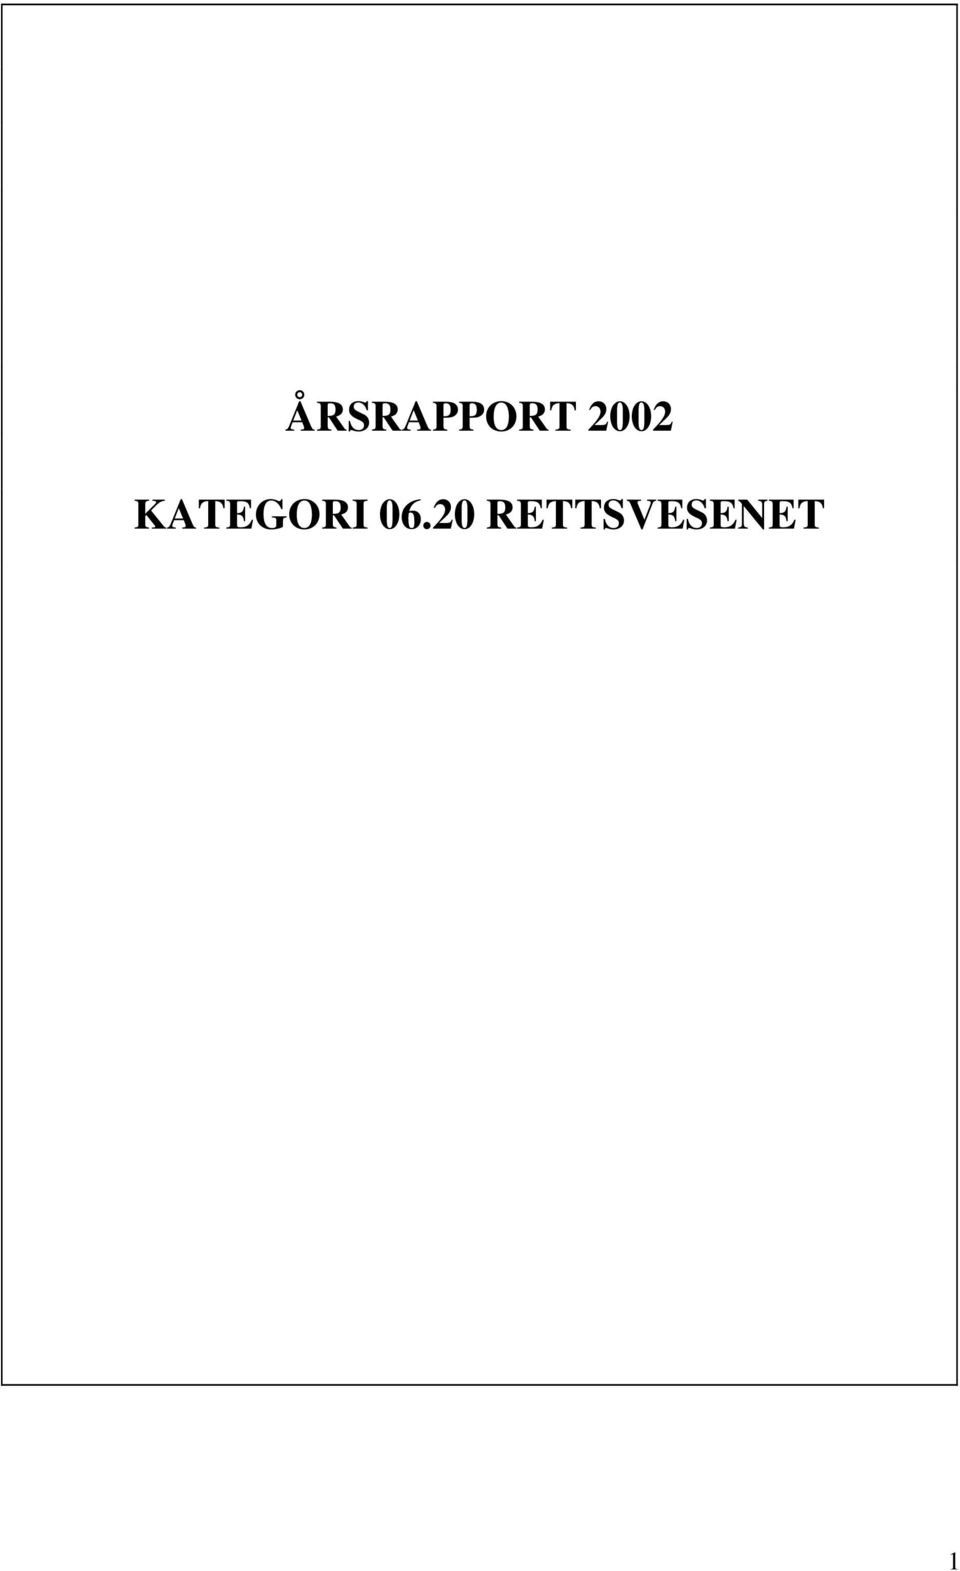 KATEGORI 06.